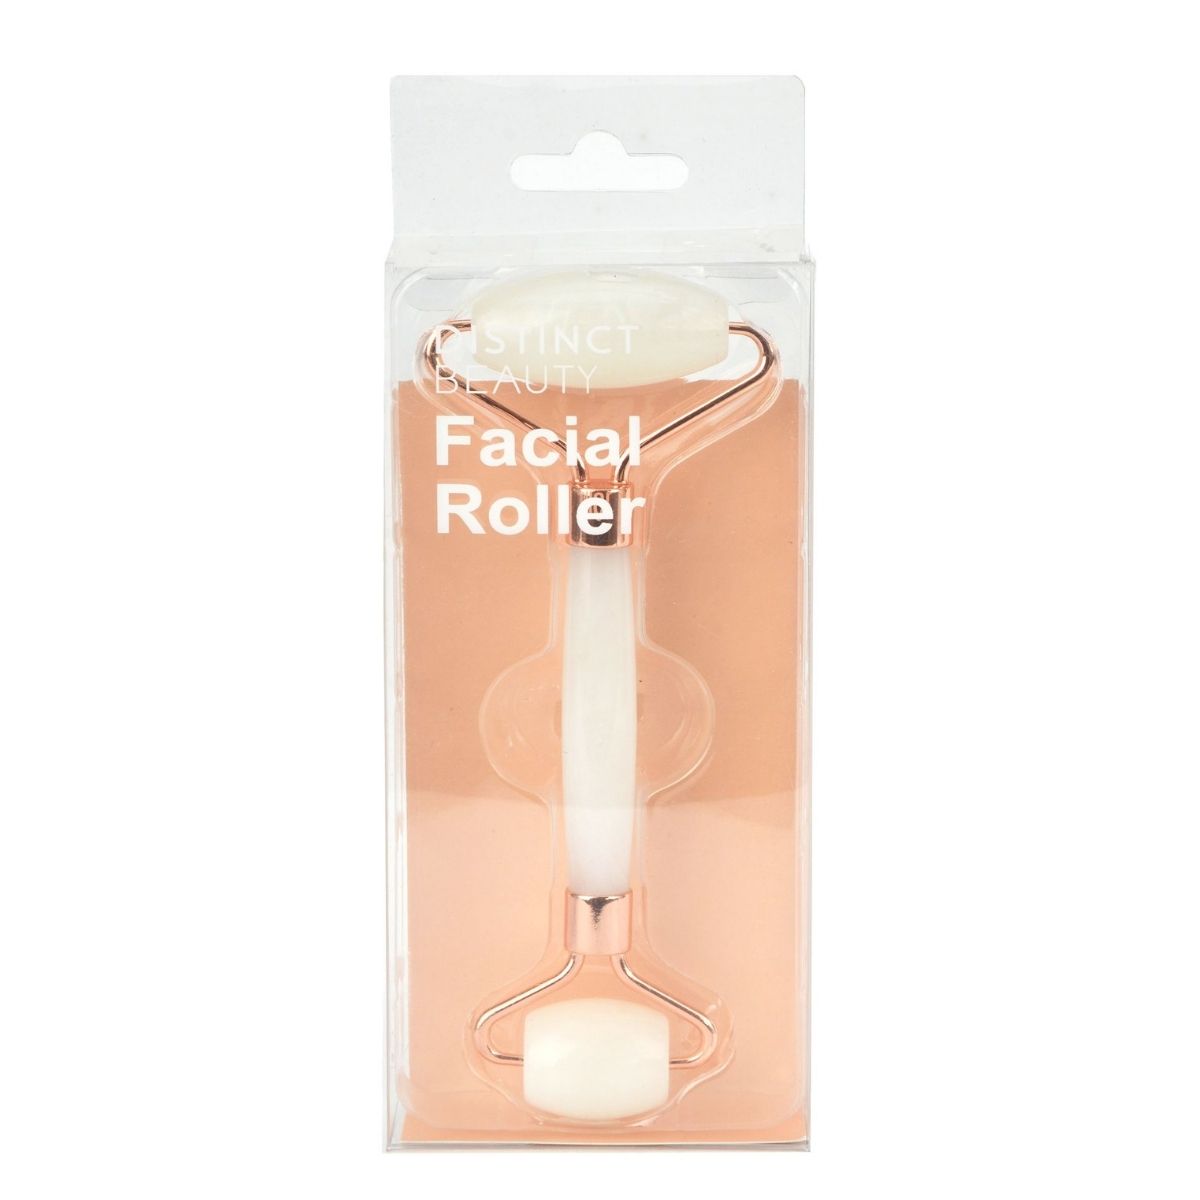 Distinct Beauty Facial Roller